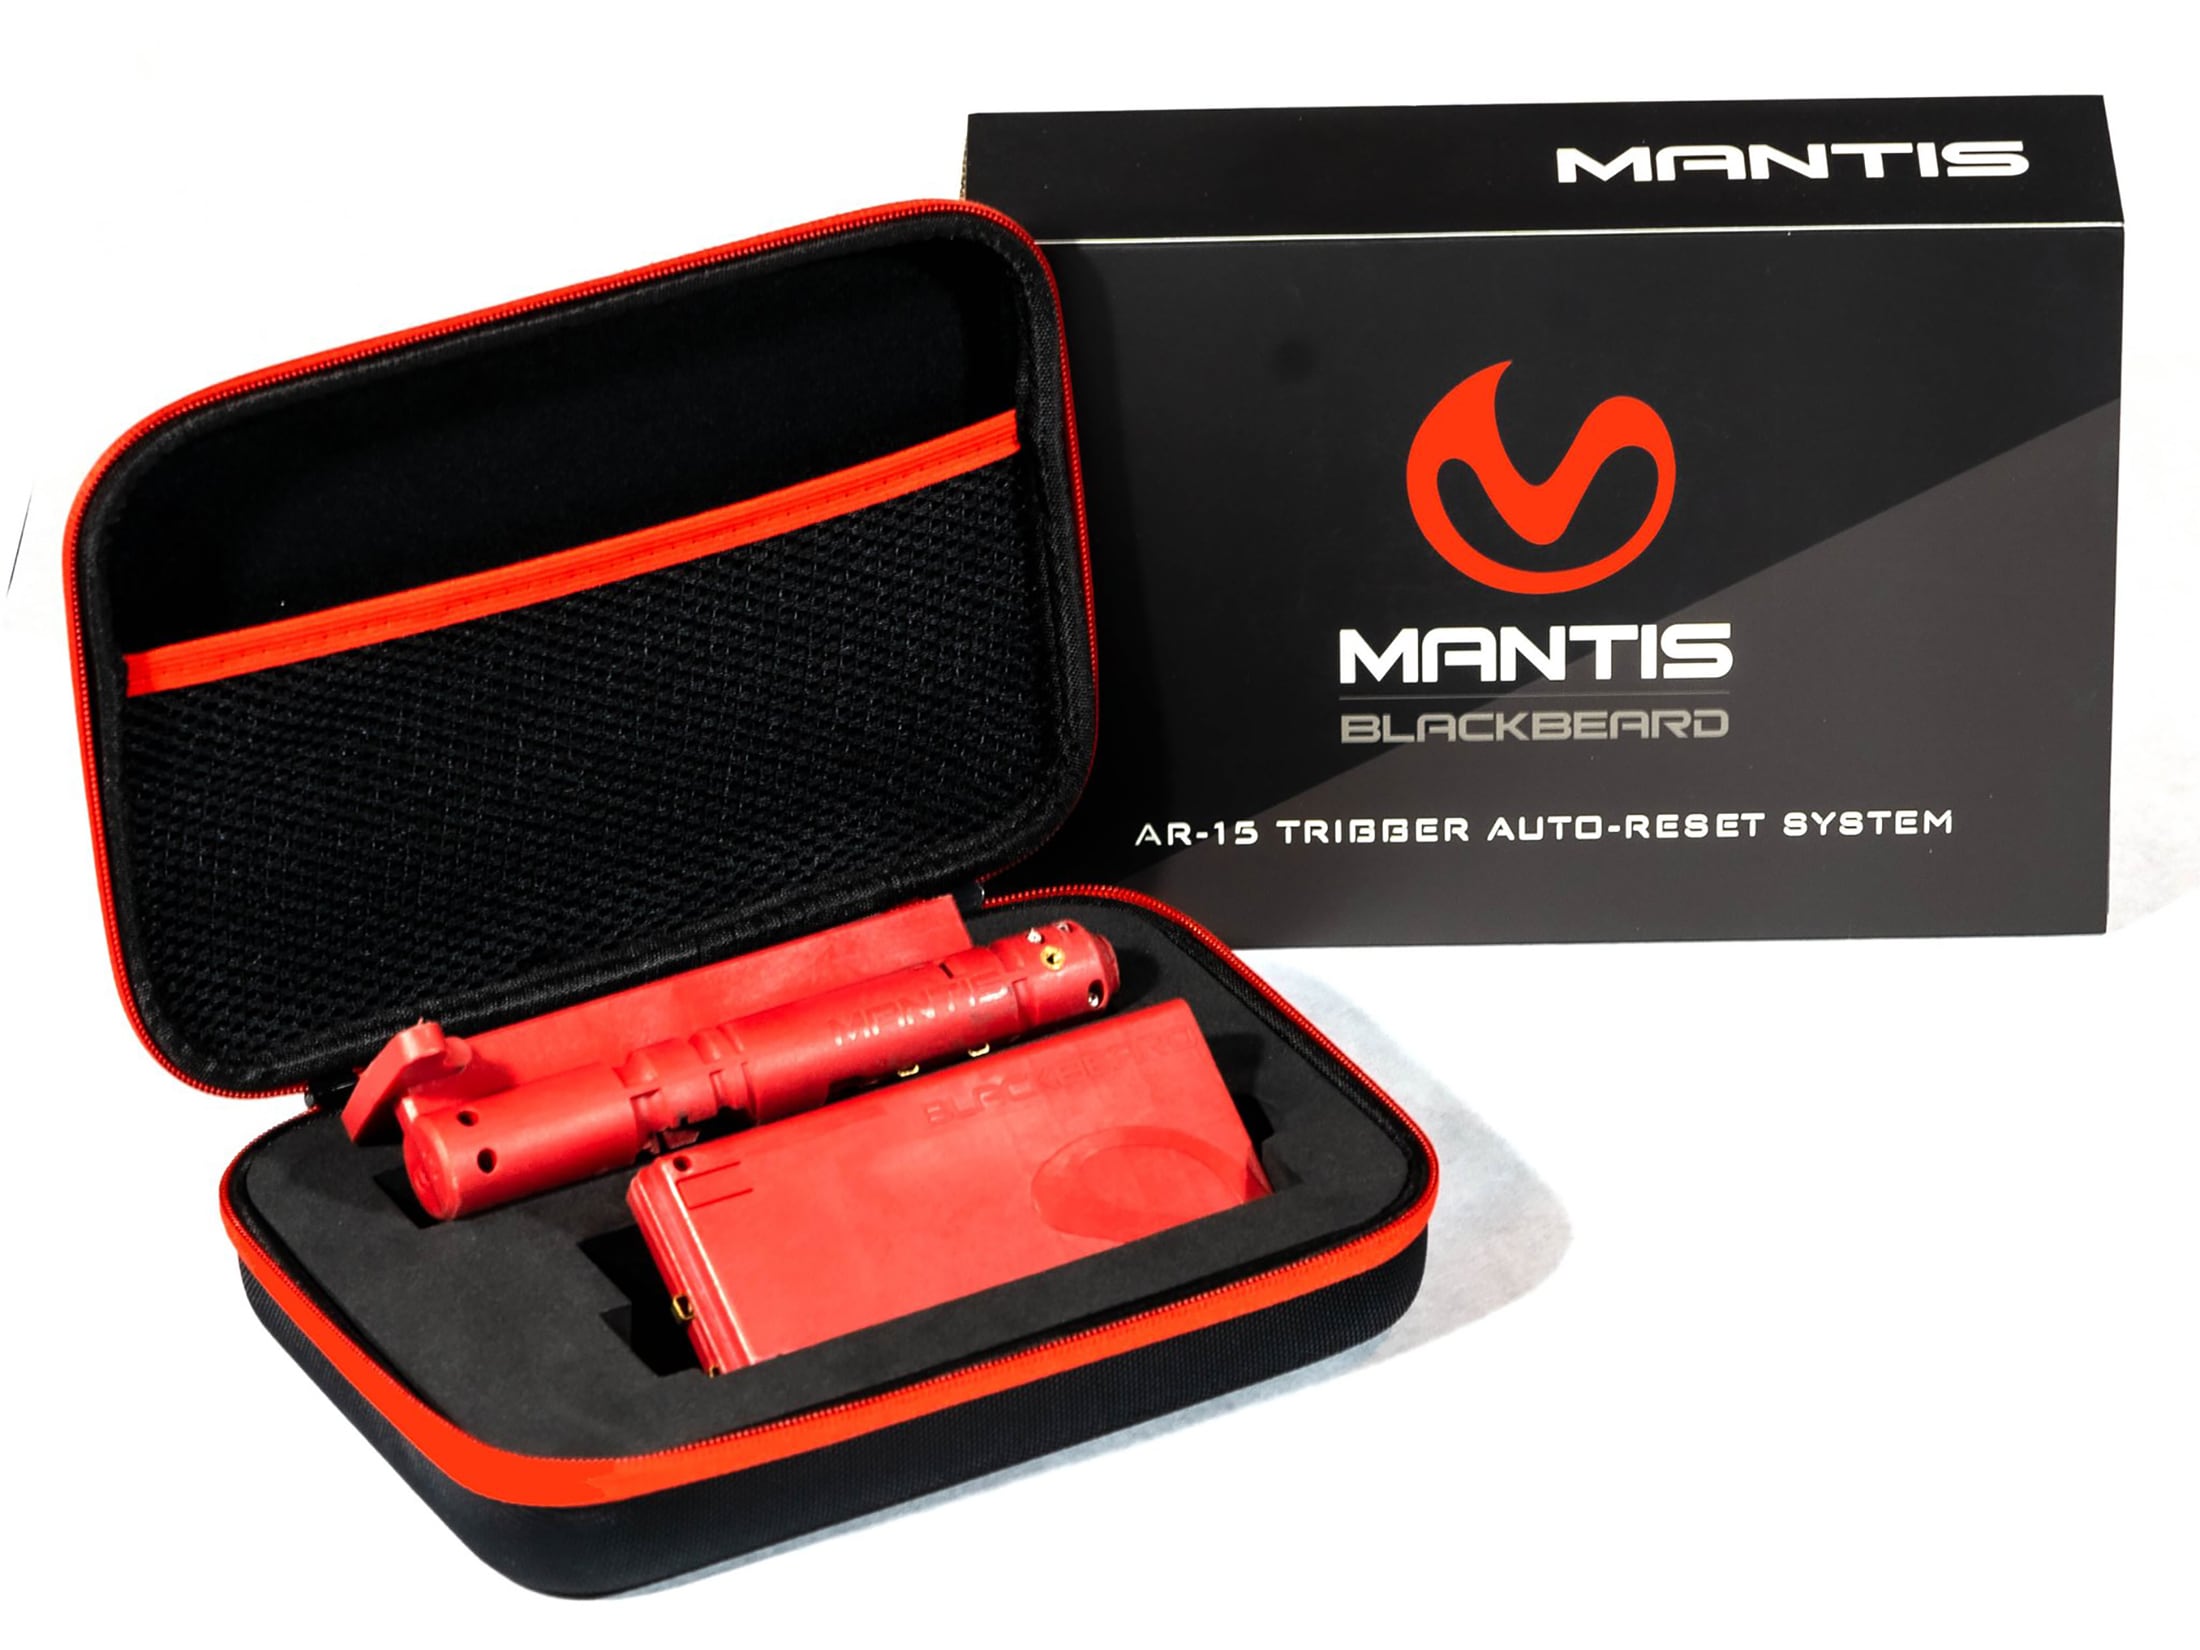 Mantis Blackbeard AR-15 Personal Firearms Training System Red Laser